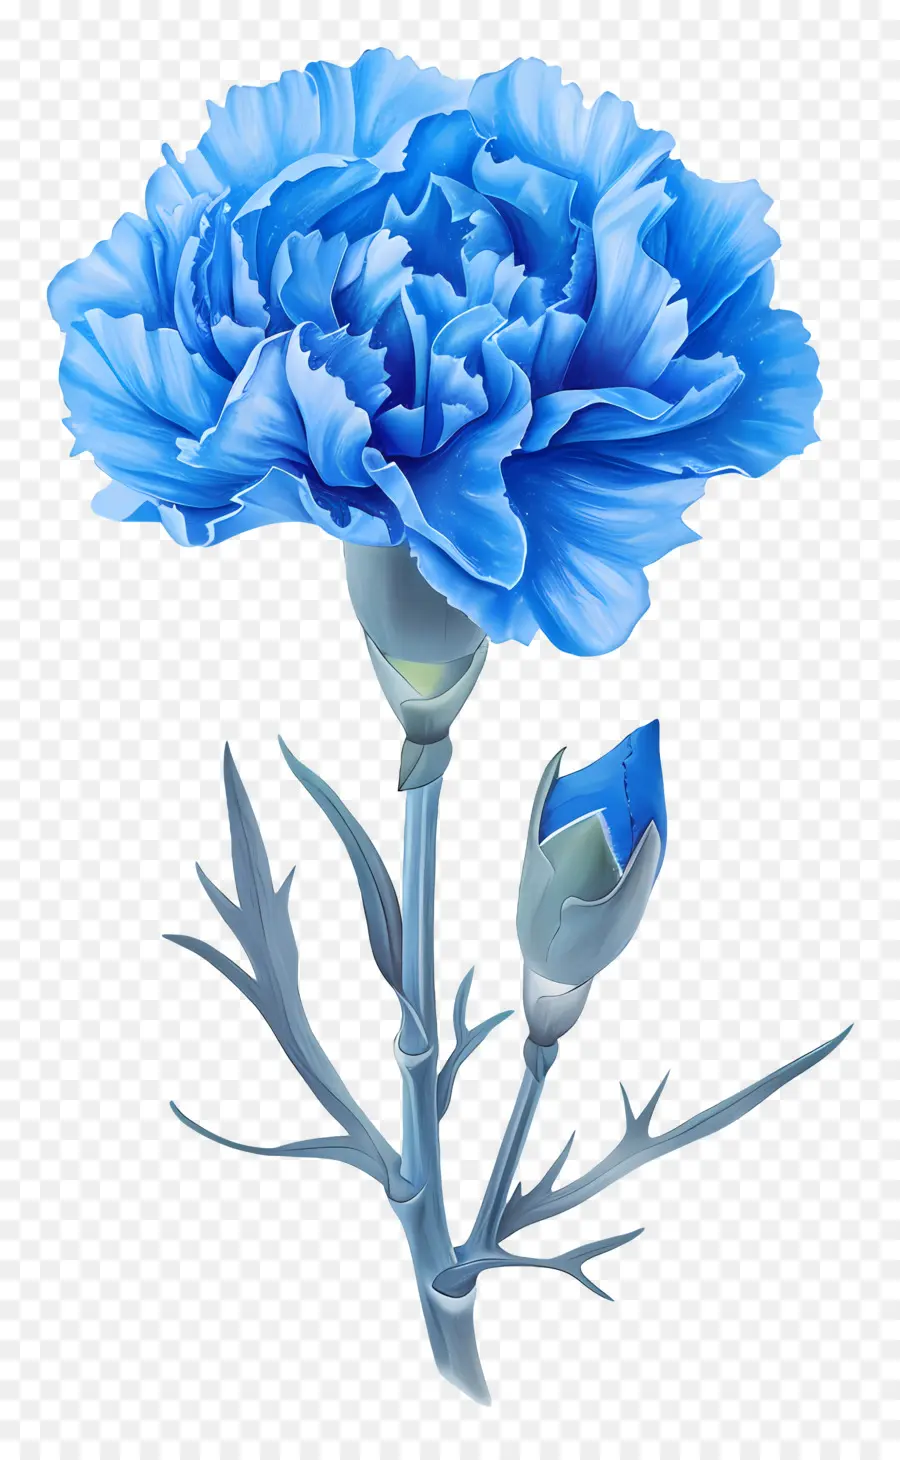 Nelkenblau blaue Nelkenblume Blütenblätter Blütenblätter - Blaue Nelke in voller Blüte mit Pistil